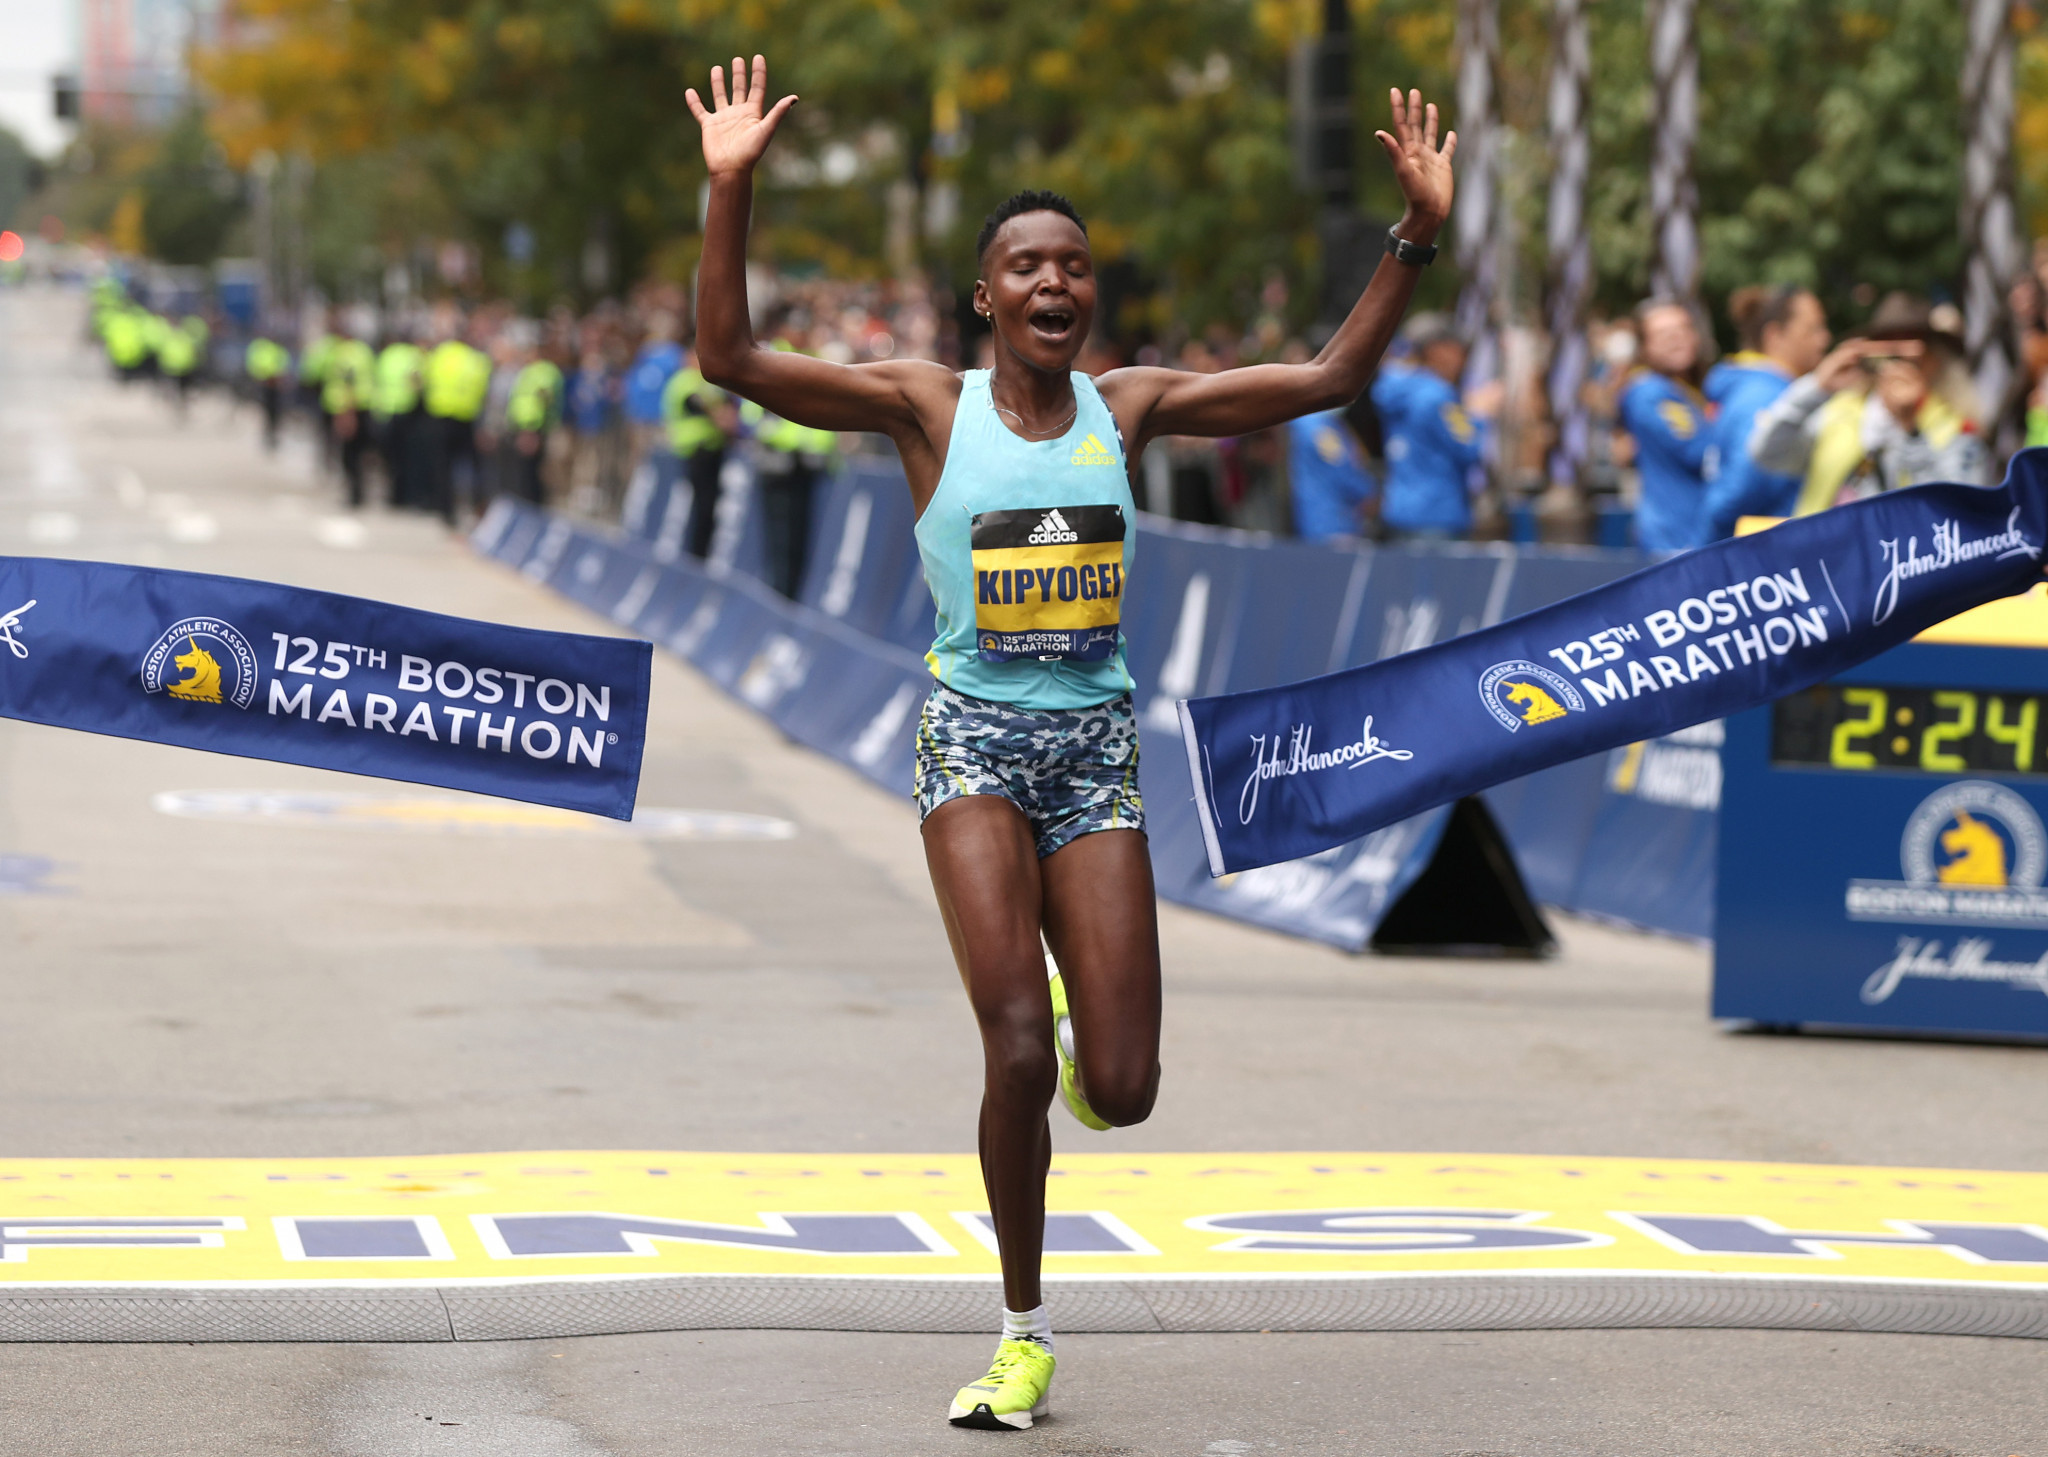 Boston Marathon winner Kipyokei given lengthy doping ban for tampering